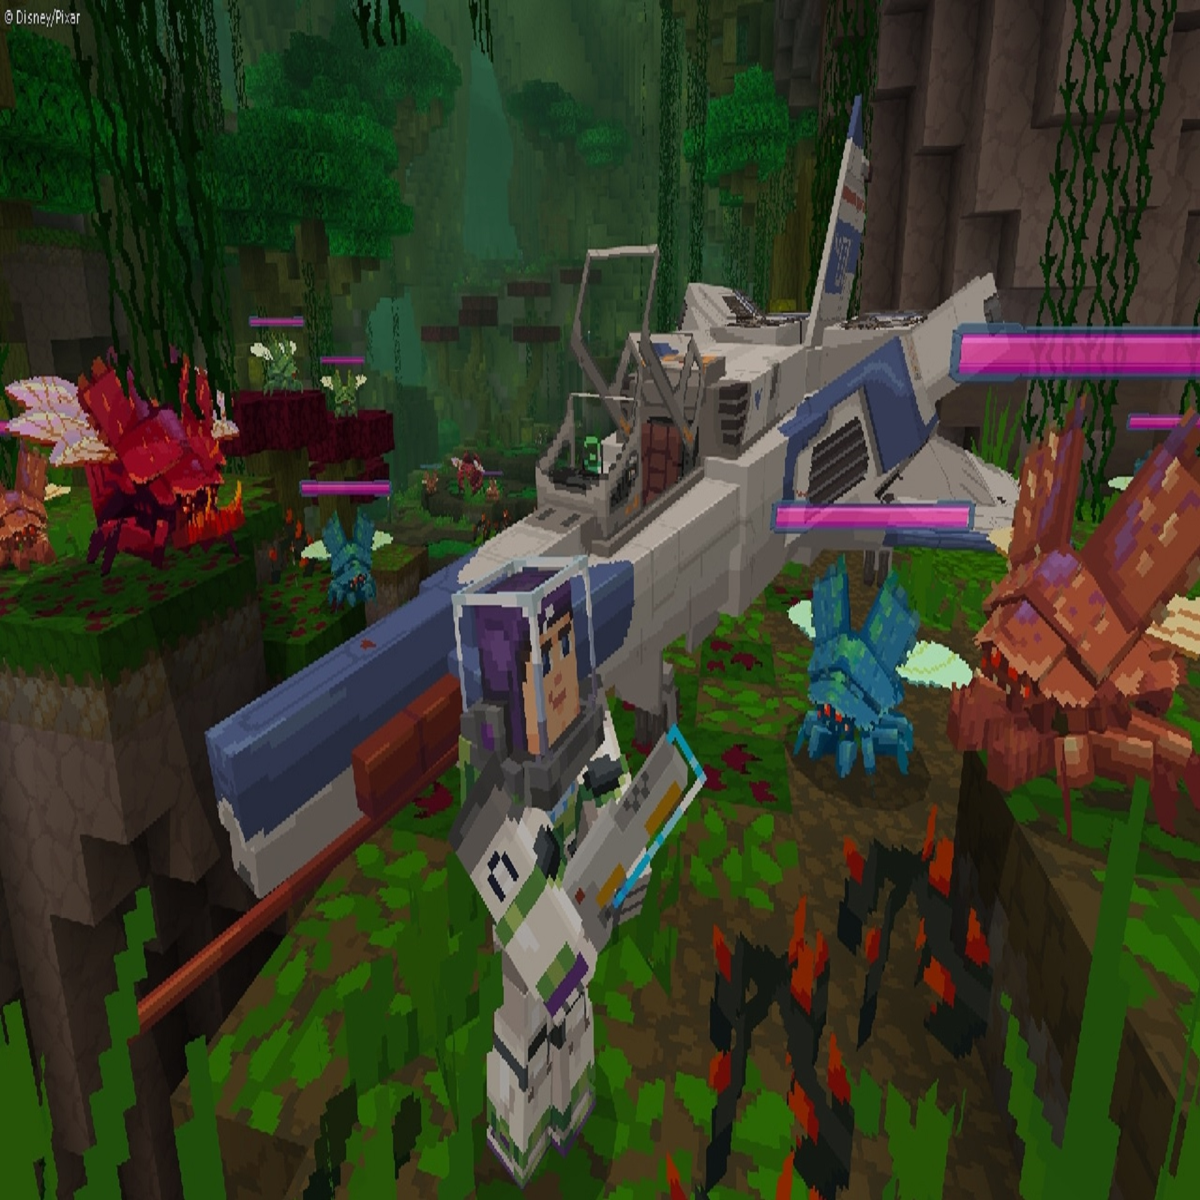 Roblox Minecraft Mods  Planet Minecraft Community